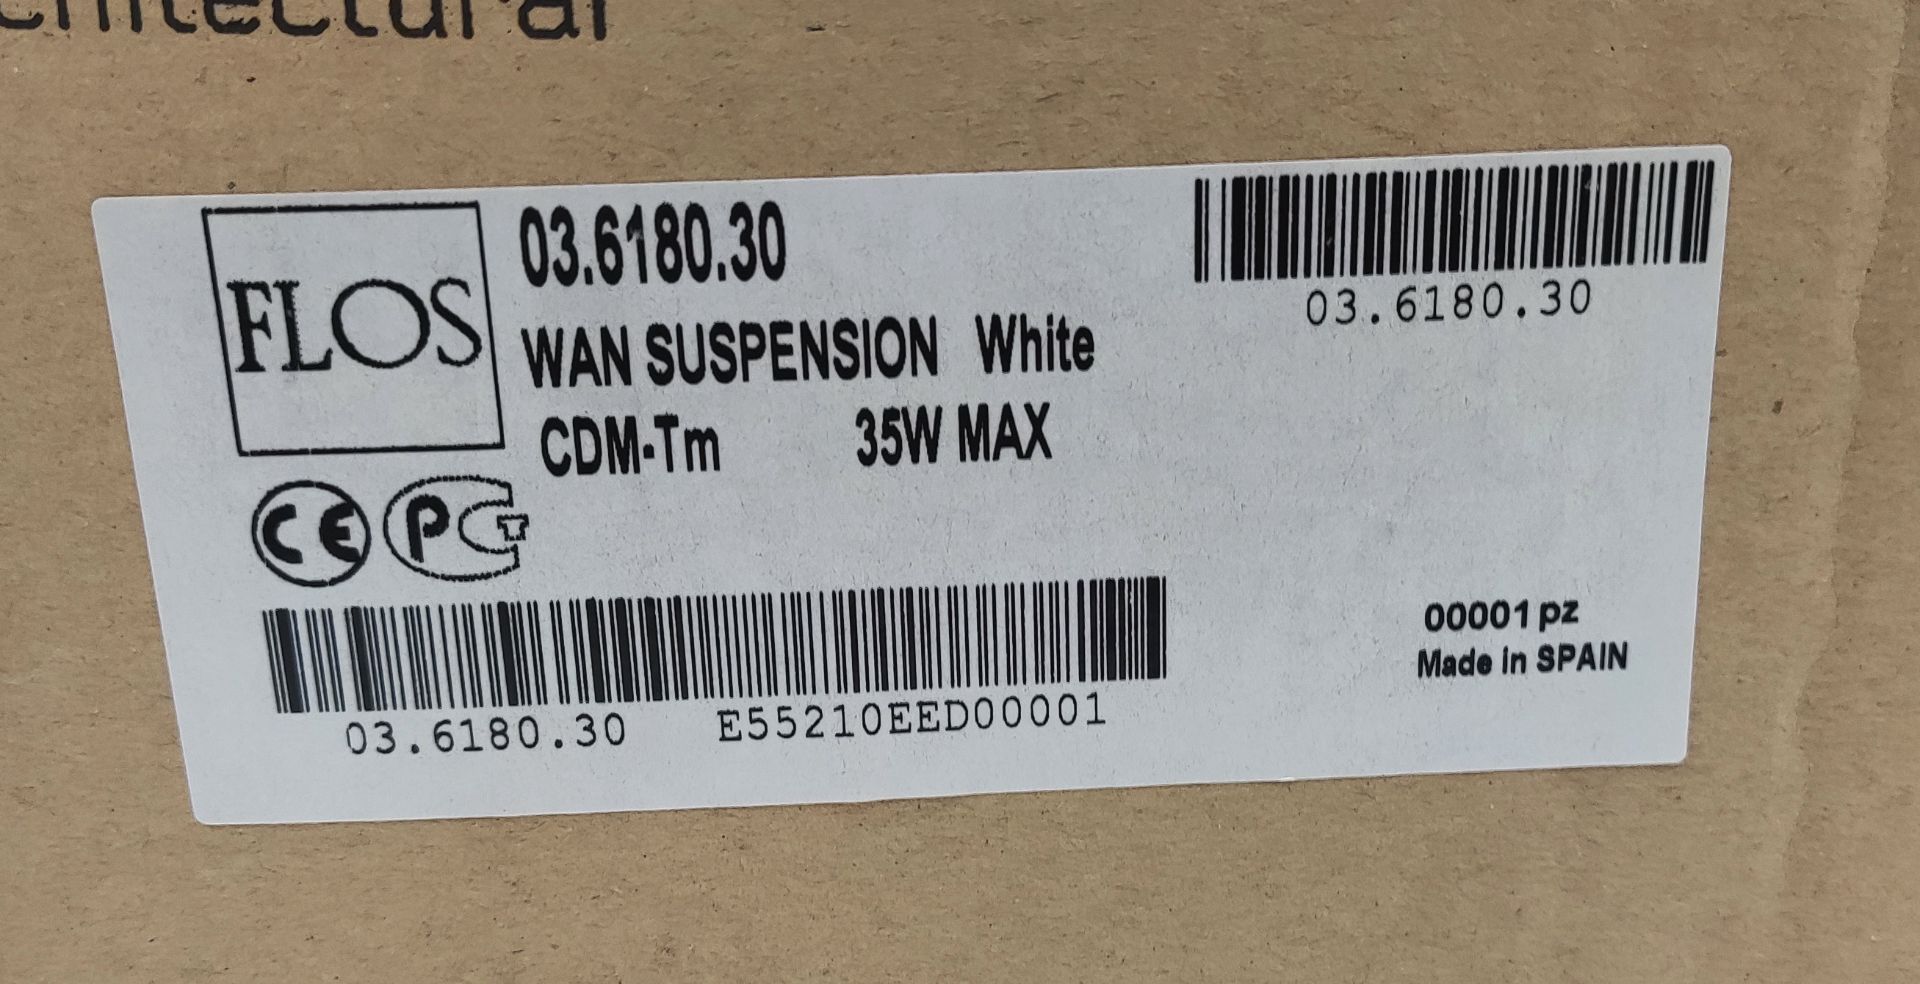 4 x FLOS Wan Suspension White Cdm-Tm 35W Max 03.6180.30 - RRP £636 - Ref: ATR152/1-4/ATRPB - - Image 5 of 23